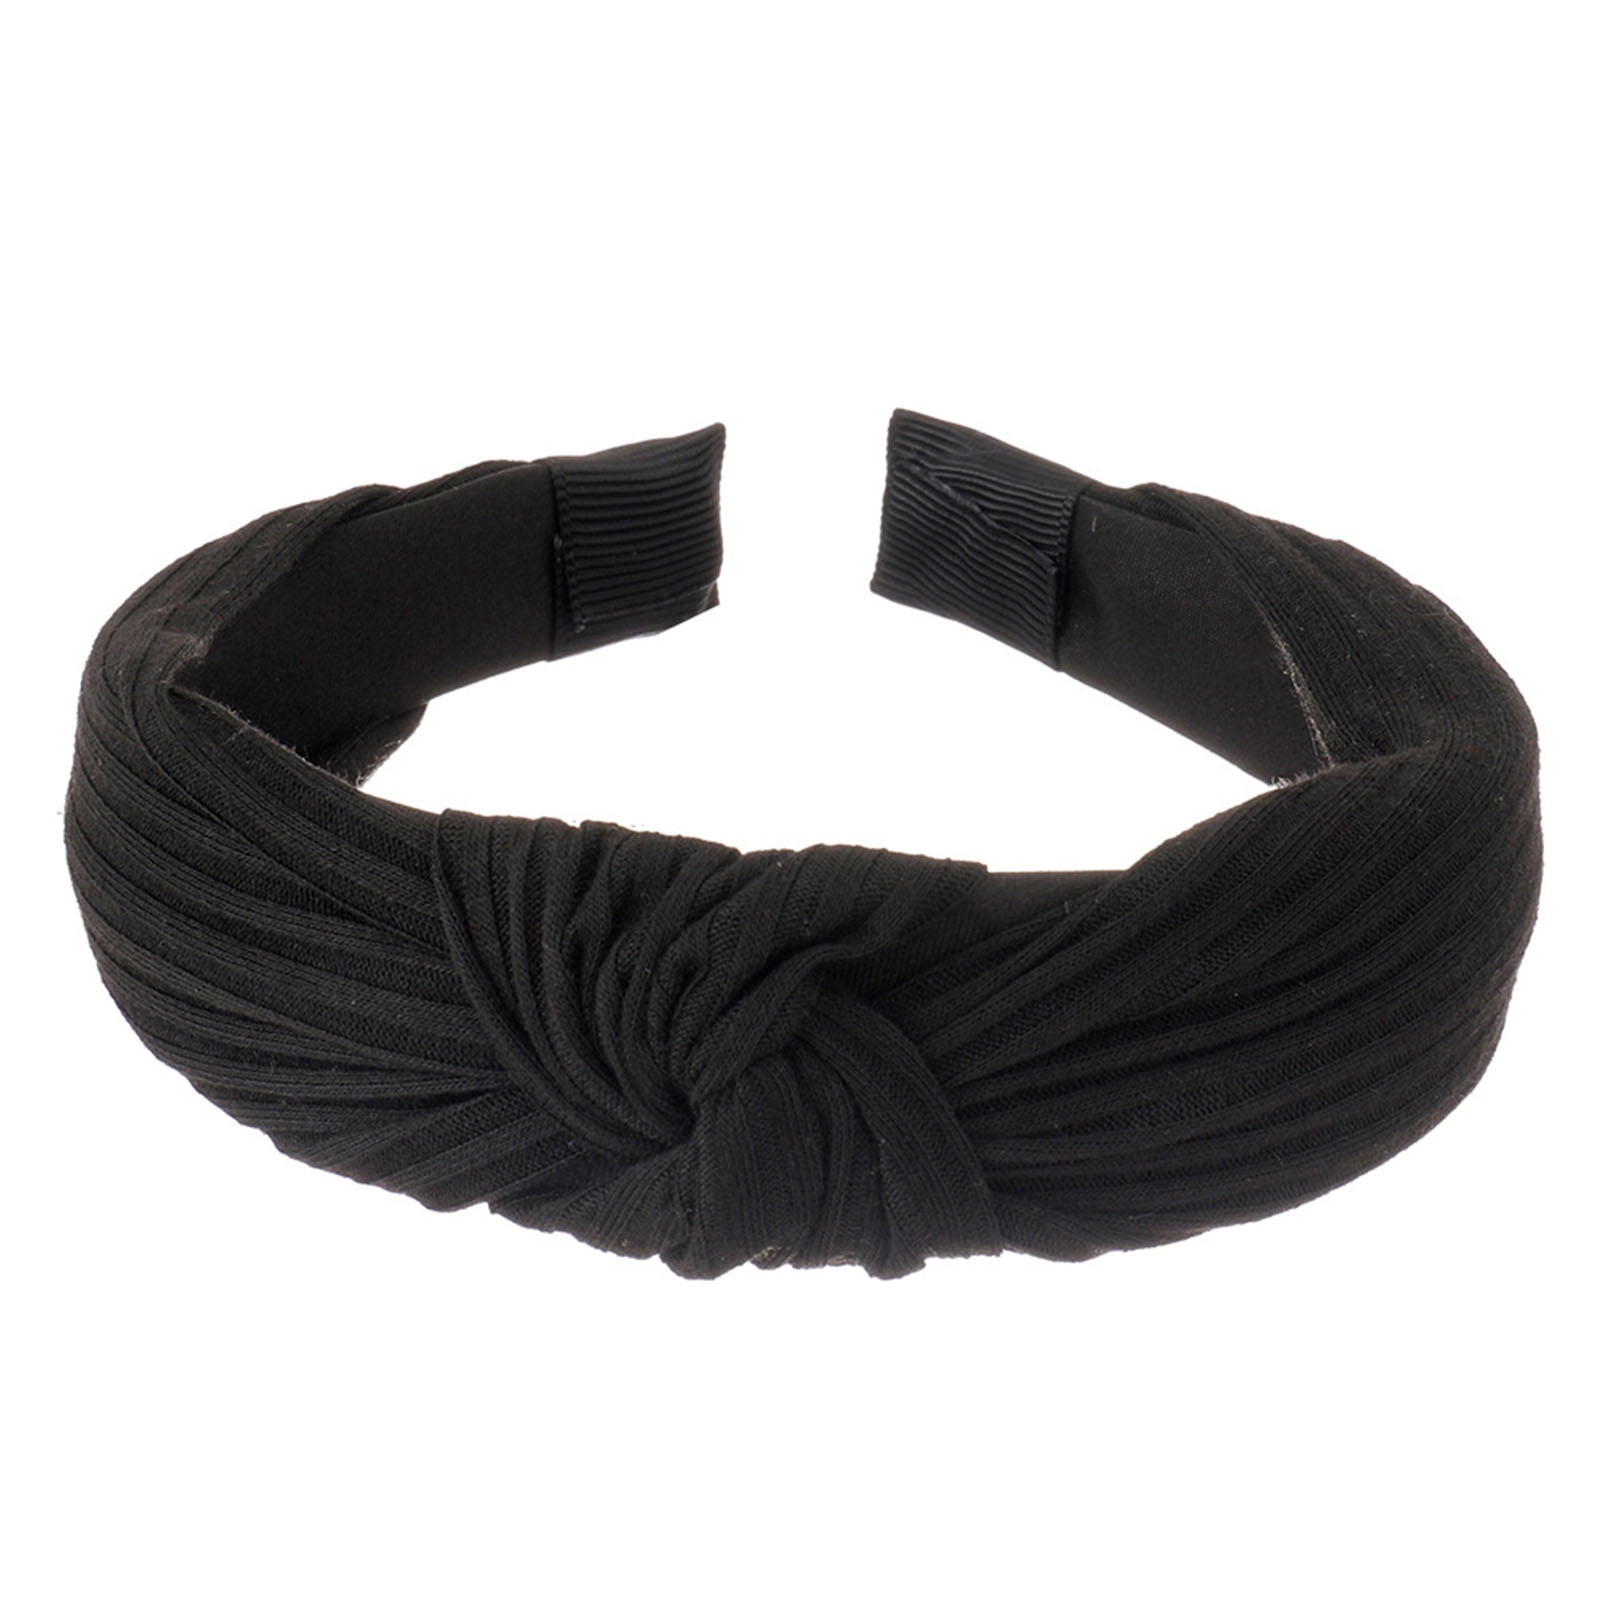 women's headband Headband for hair geometries headband with central knot Bauhaus geometric pattern black and white